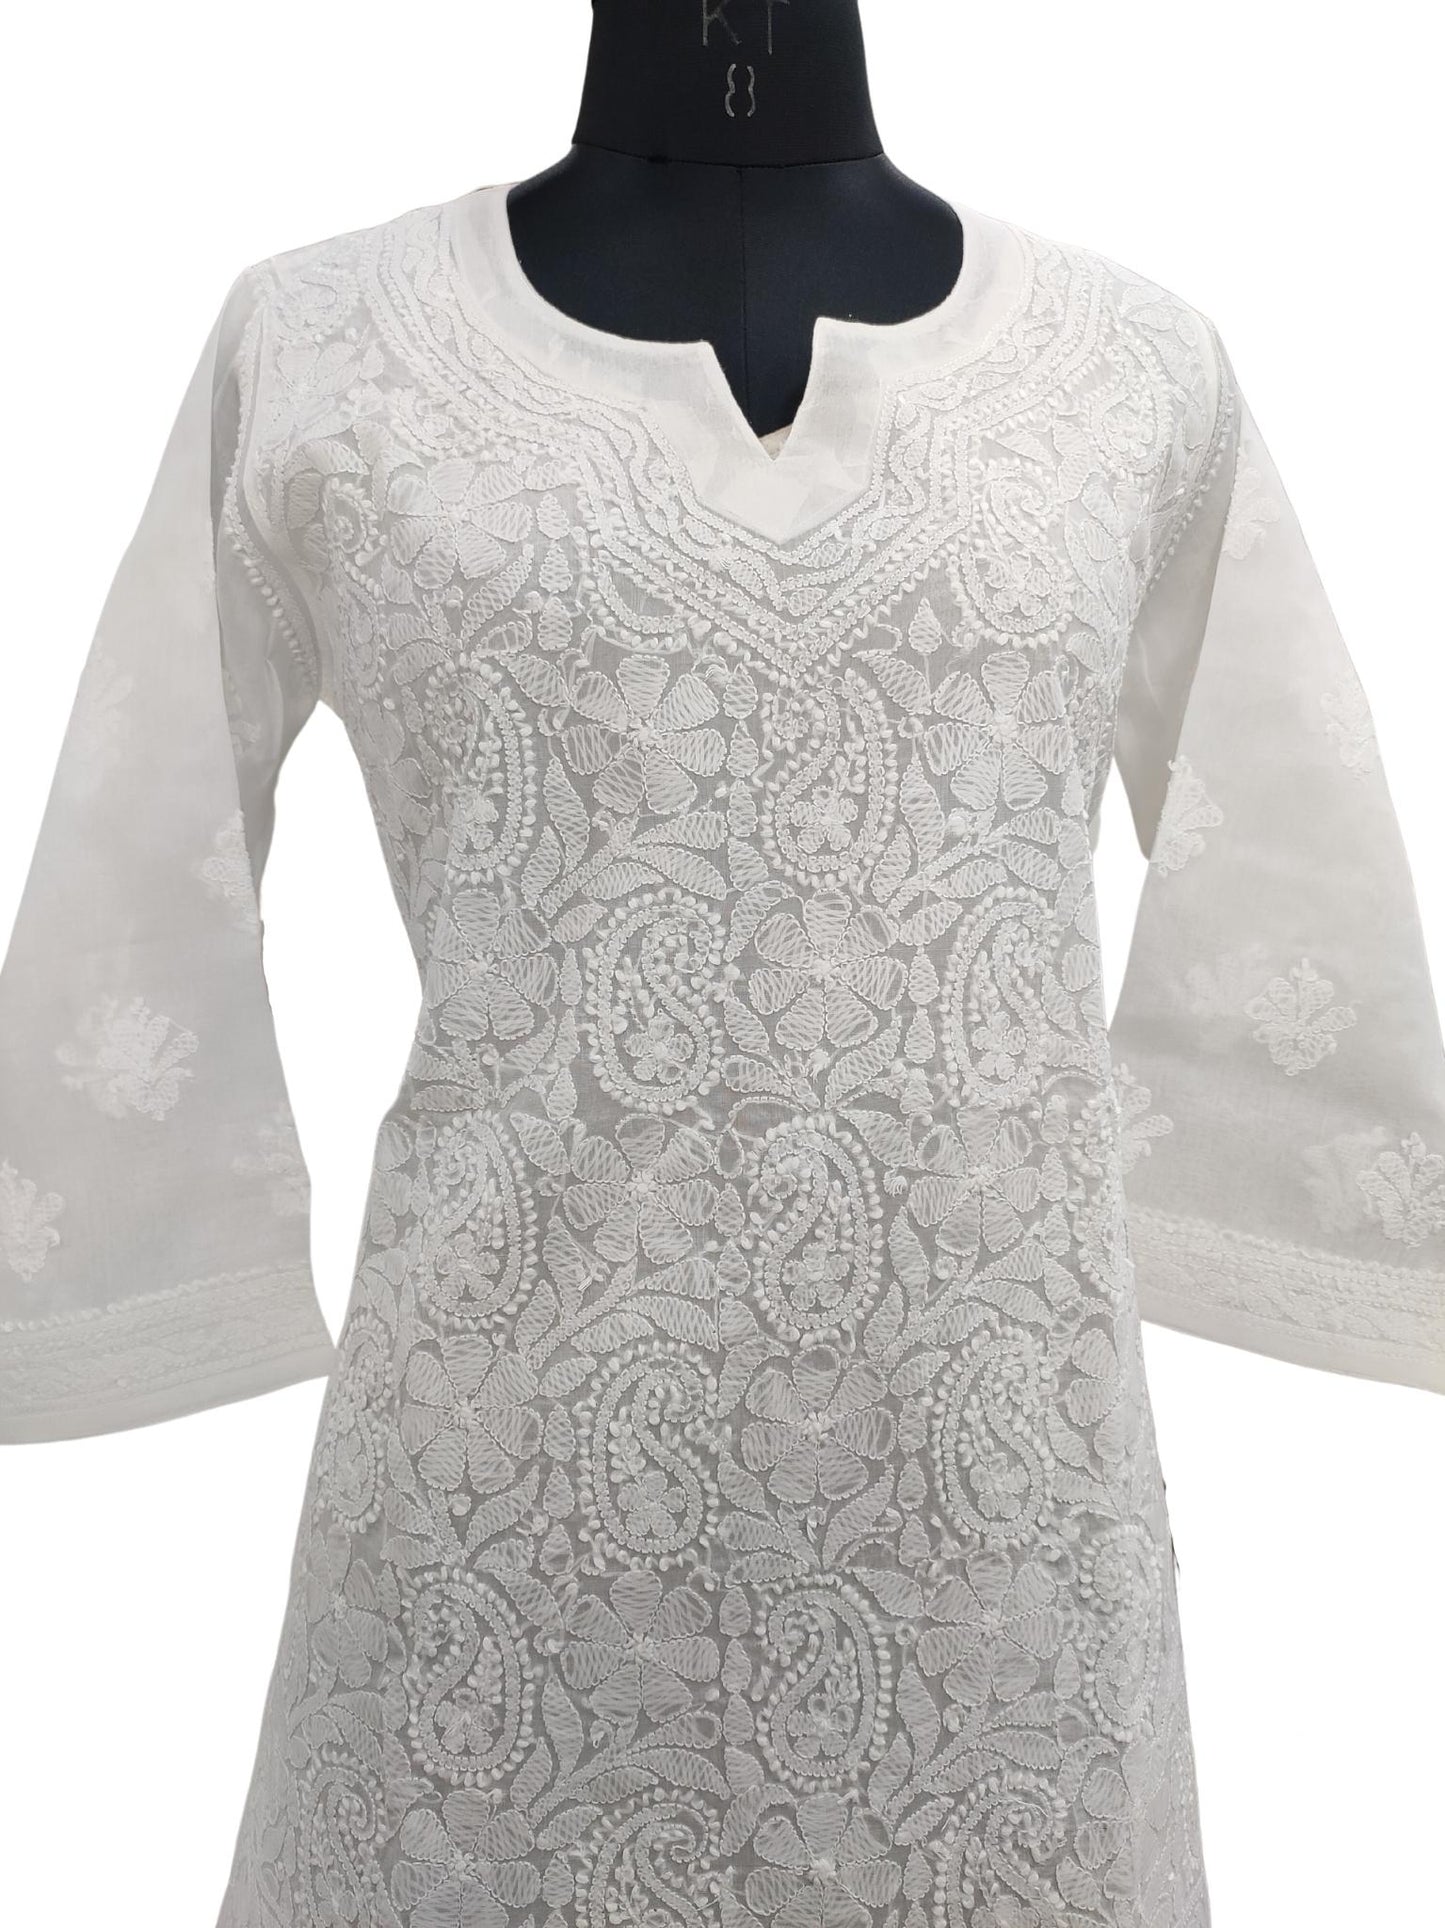 VOMIRA Short Kurti for Women| Rayon Cotton Embroiderd Straight Kurta |  Women's Tunic TC004-01-S Cream : Amazon.in: Fashion